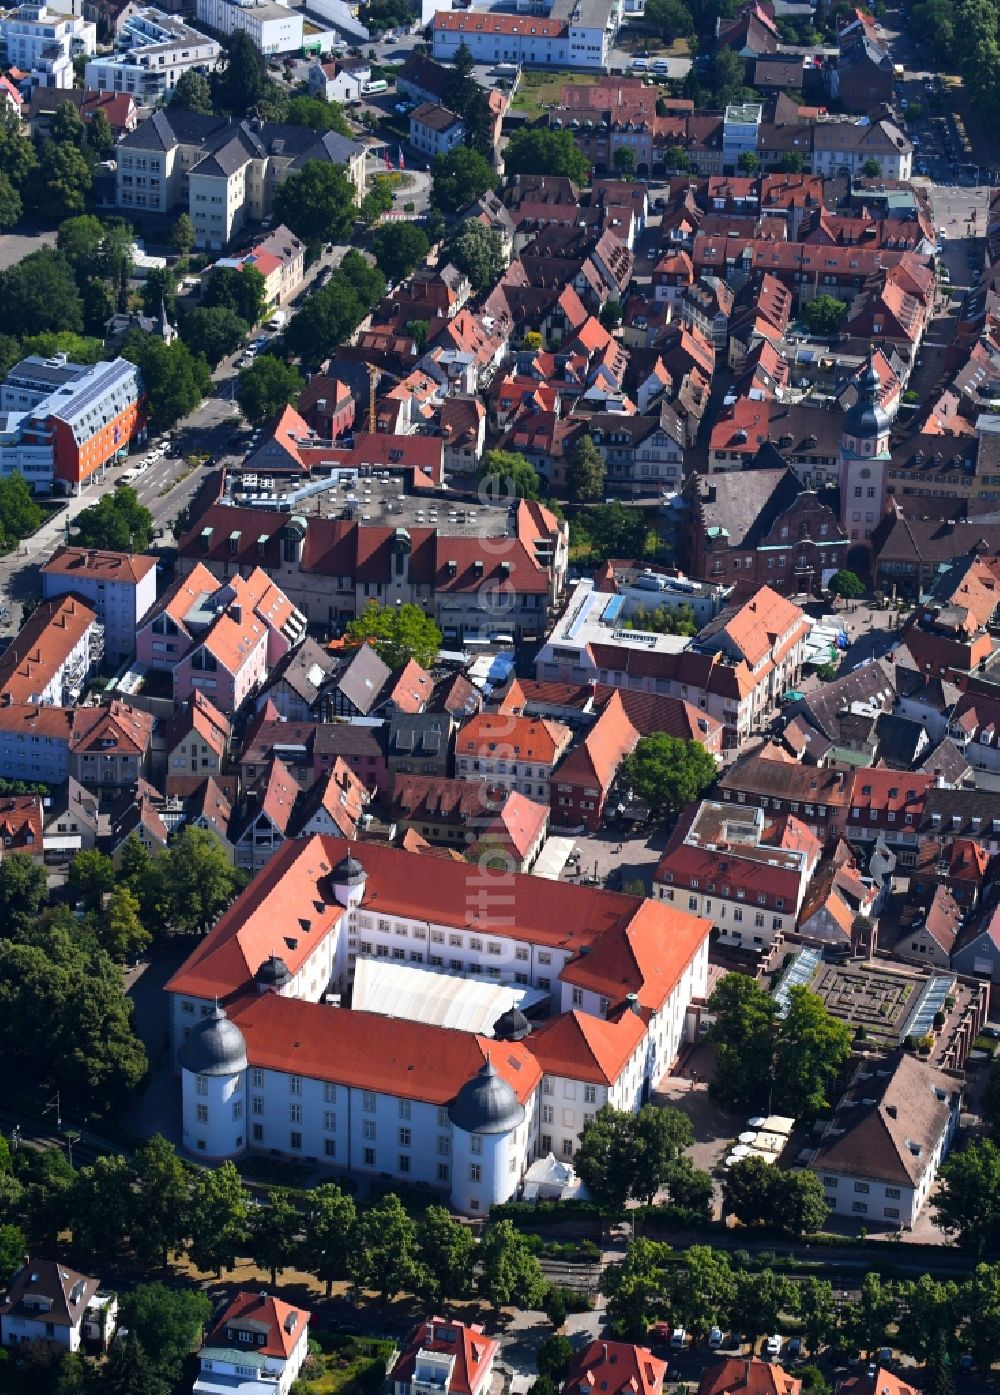 Luftaufnahme Ettlingen - Burganlage des Schloss Ettlingen im historischen Stadtkern der Altstadt in Ettlingen im Bundesland Baden-Württemberg, Deutschland